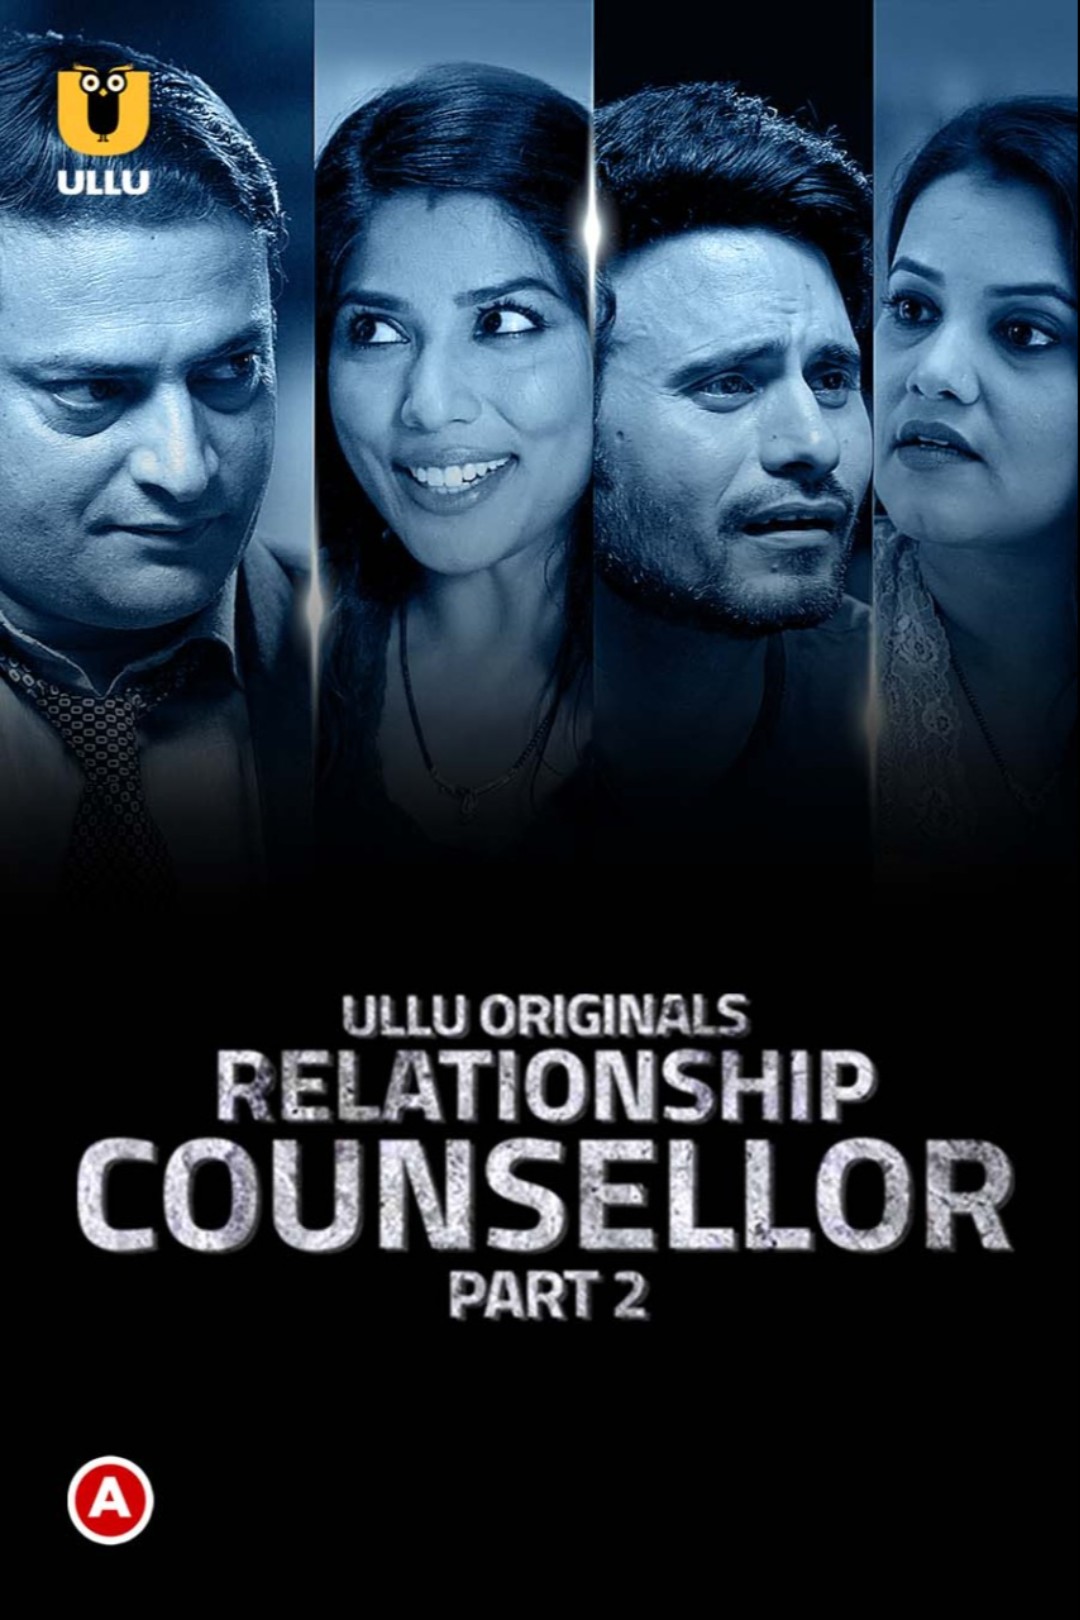 Relationship Counsellor (Part 2) 2021 S01 Hindi Ullu Originals Complete Web Series 720p HDRip